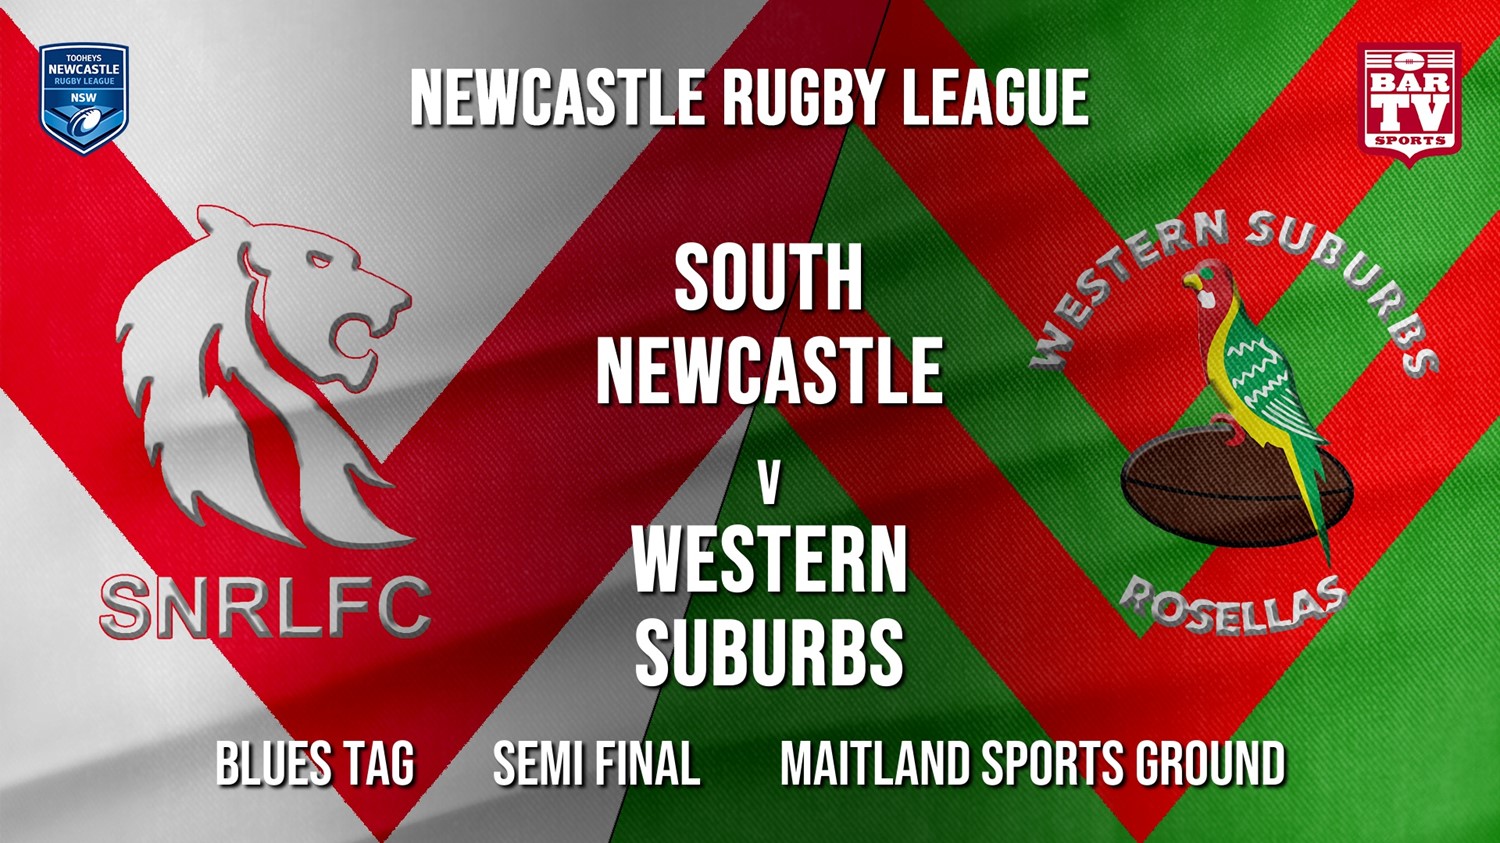 Newcastle Rugby League Semi Final - Blues Tag - South Newcastle v Western Suburbs Rosellas Slate Image